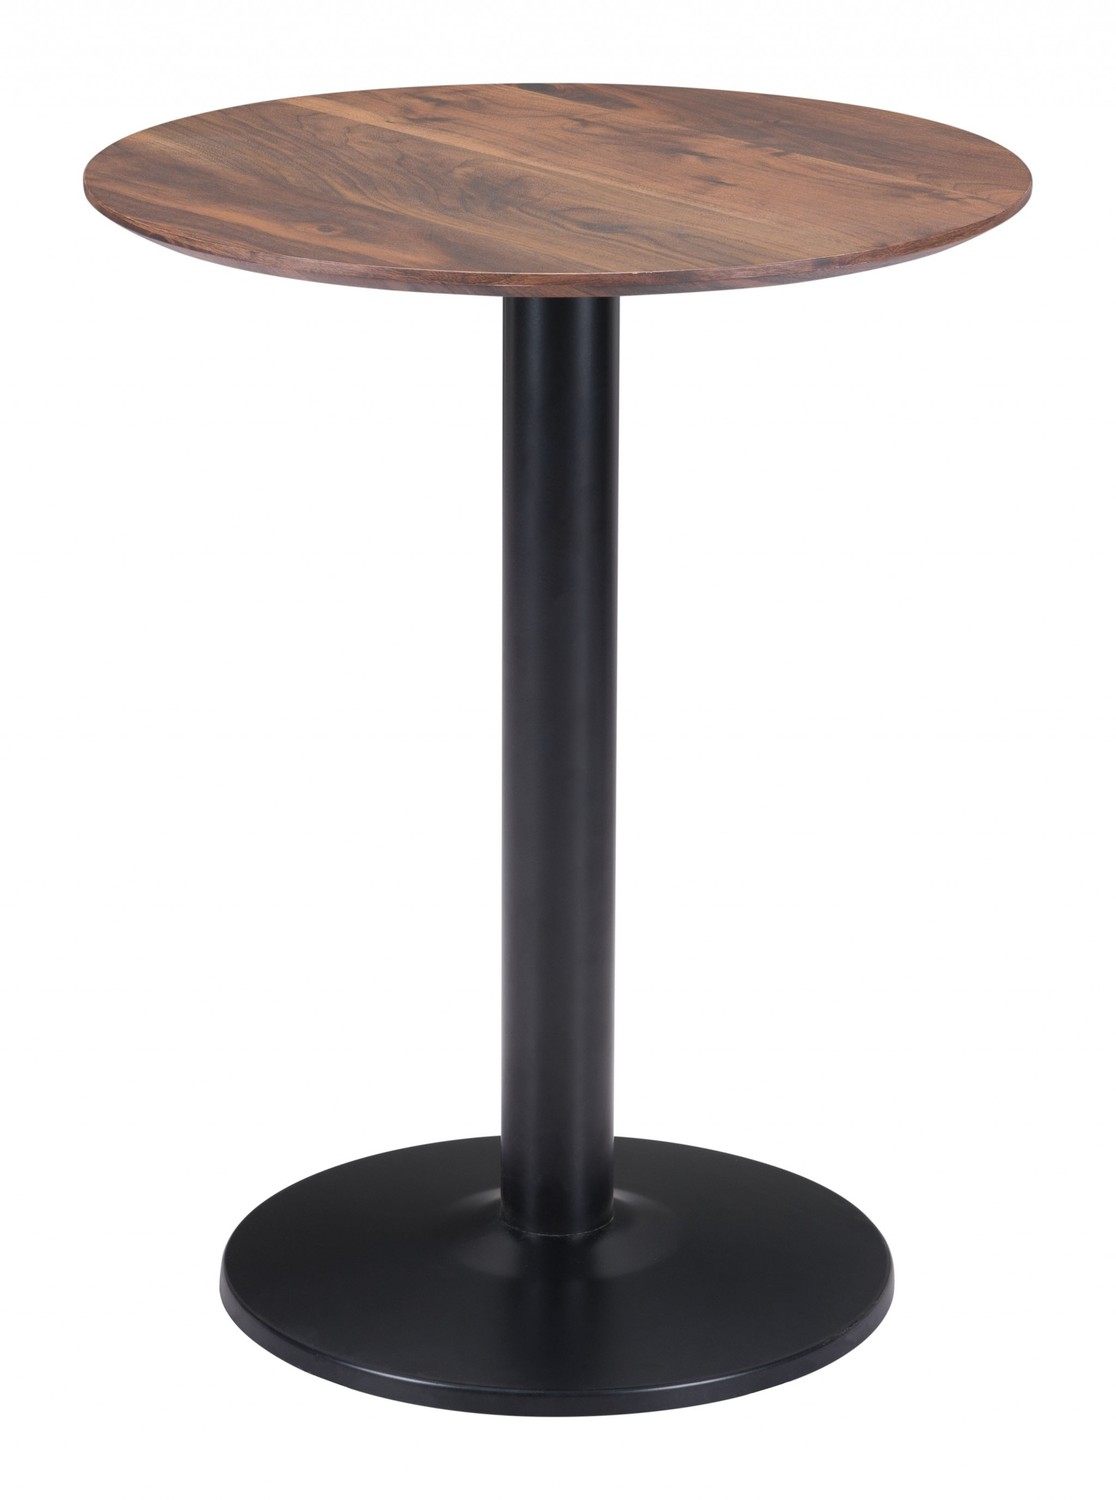 Walnut and Black Pedestal Bistro Table